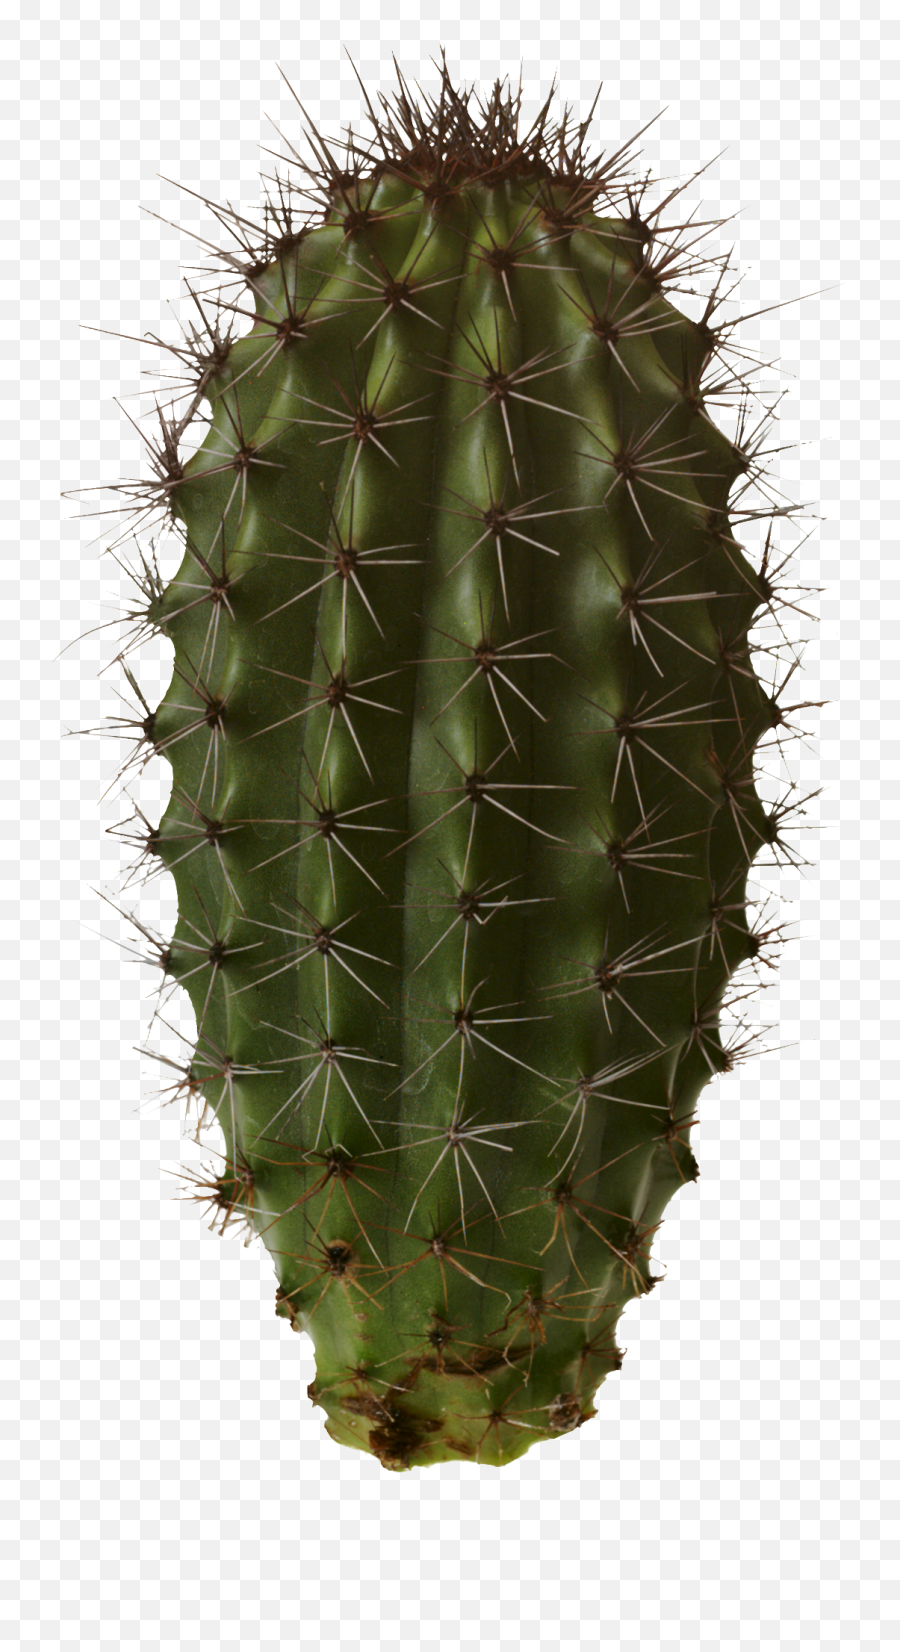 Download Cactus Png 7 1 - Desert Plants No Background,Cacti Png